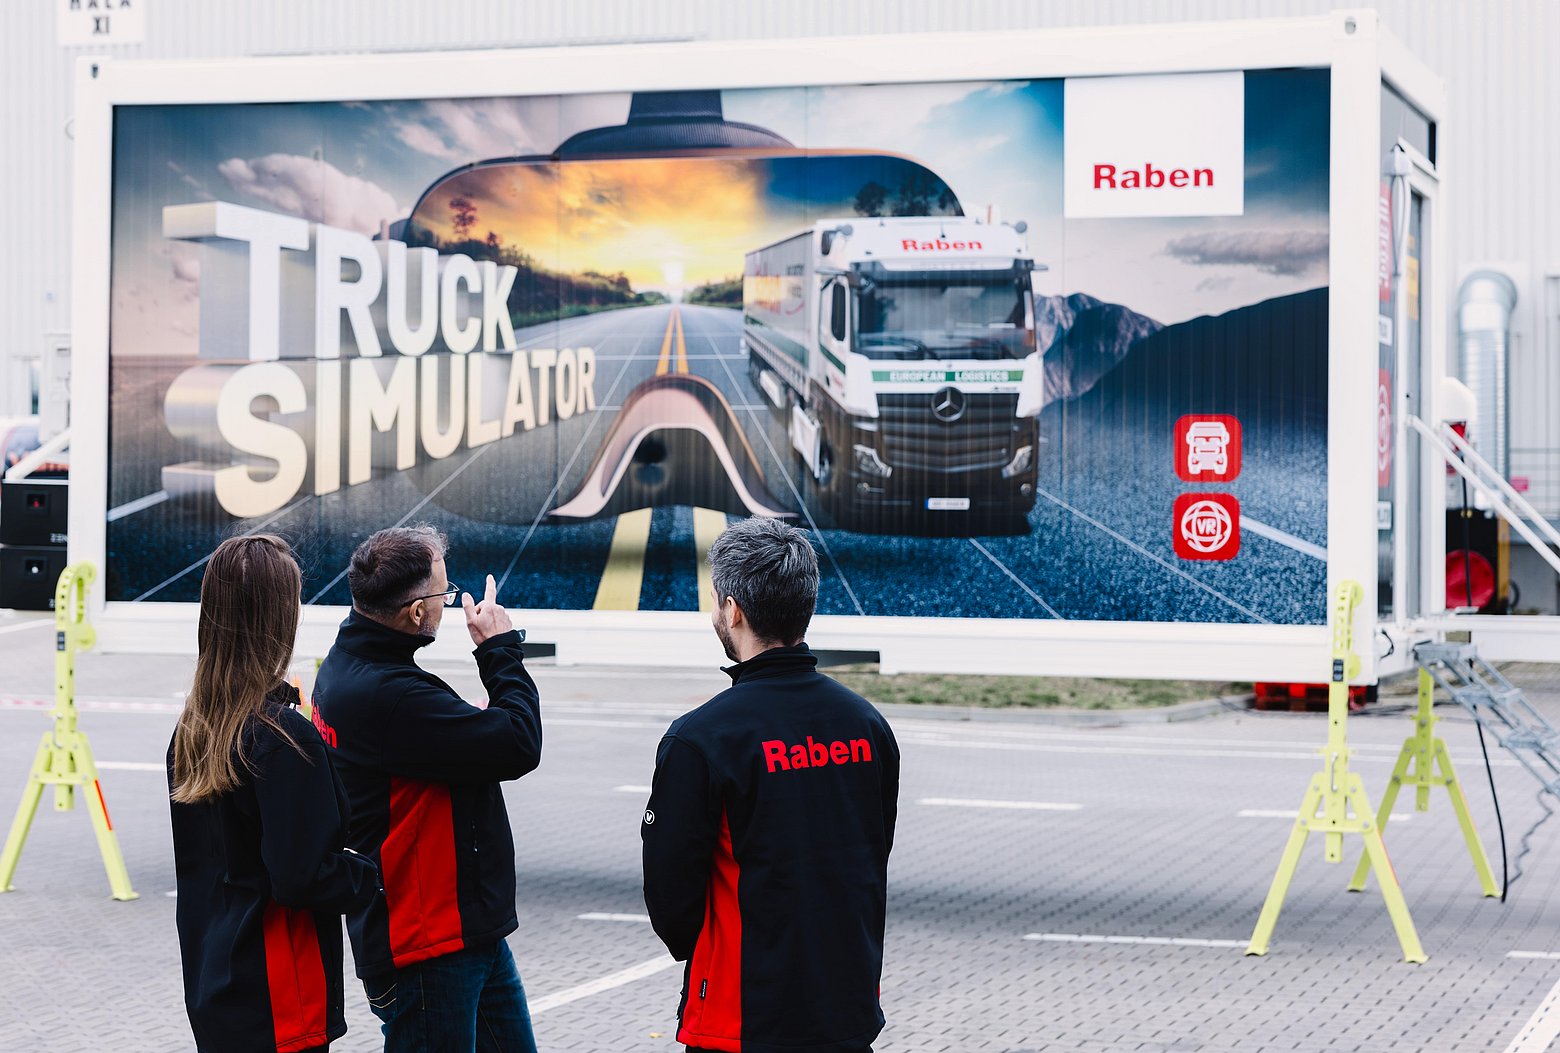 VR Truck Simulator Raben (źródło: polska.raben-group.com)